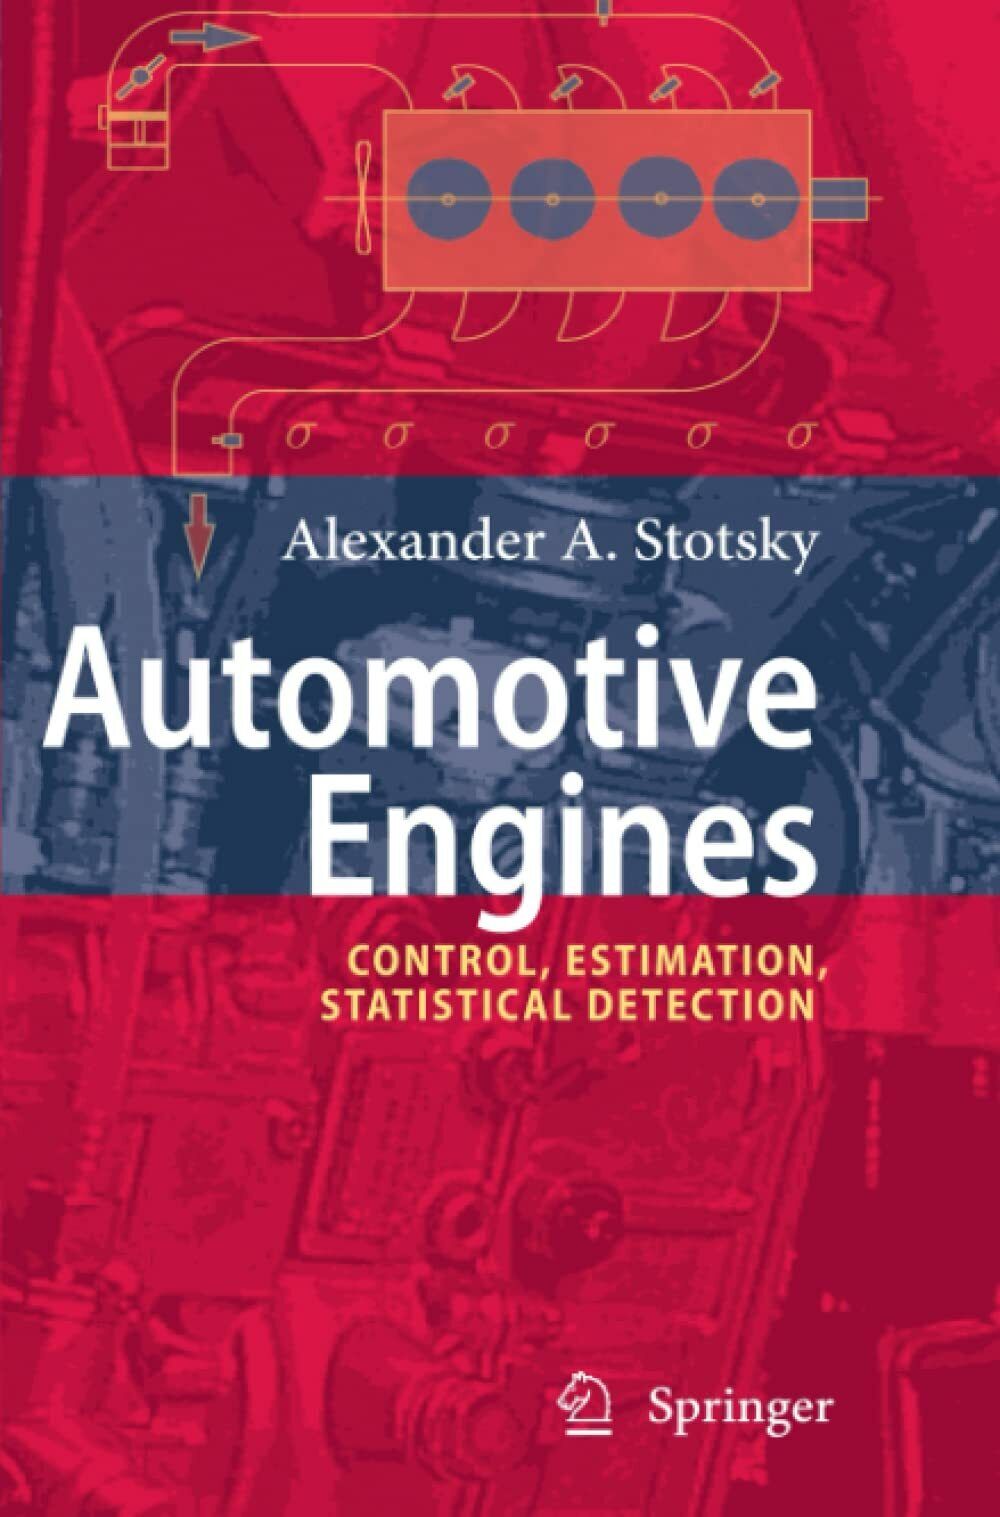 Automotive Engines - Alexander A. Stotsky - Springer, 2010